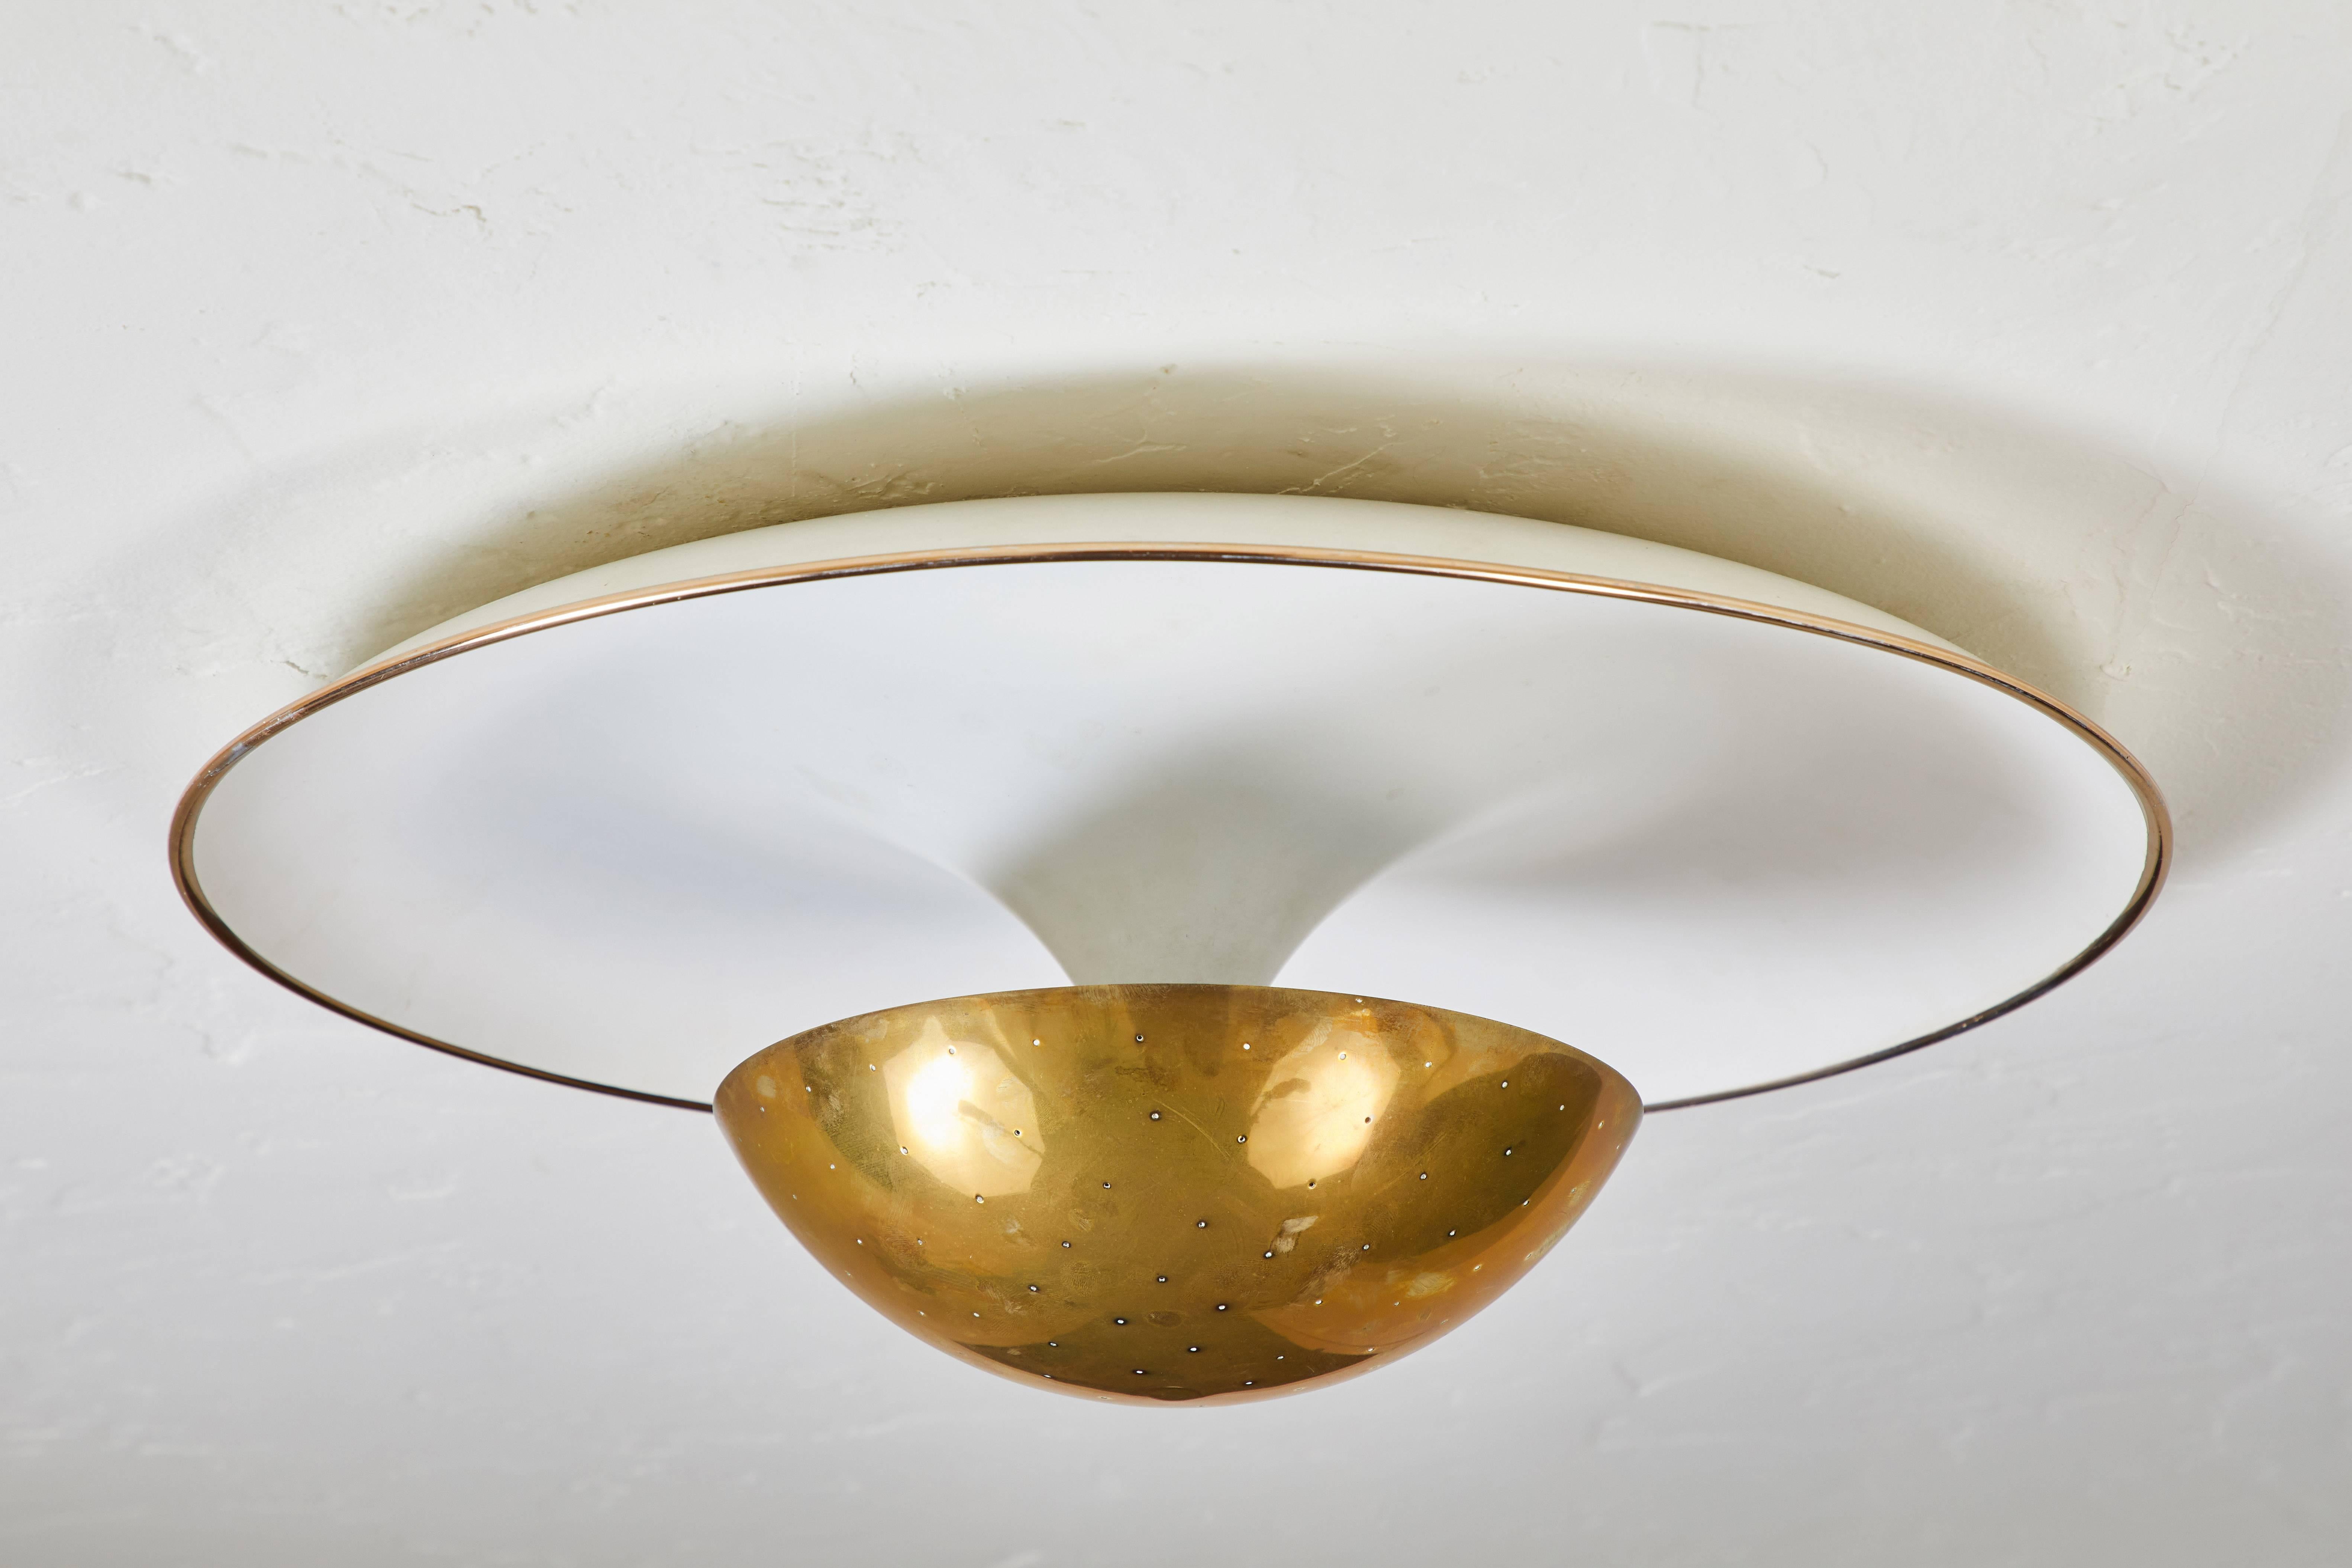 arteluce ceiling lamp